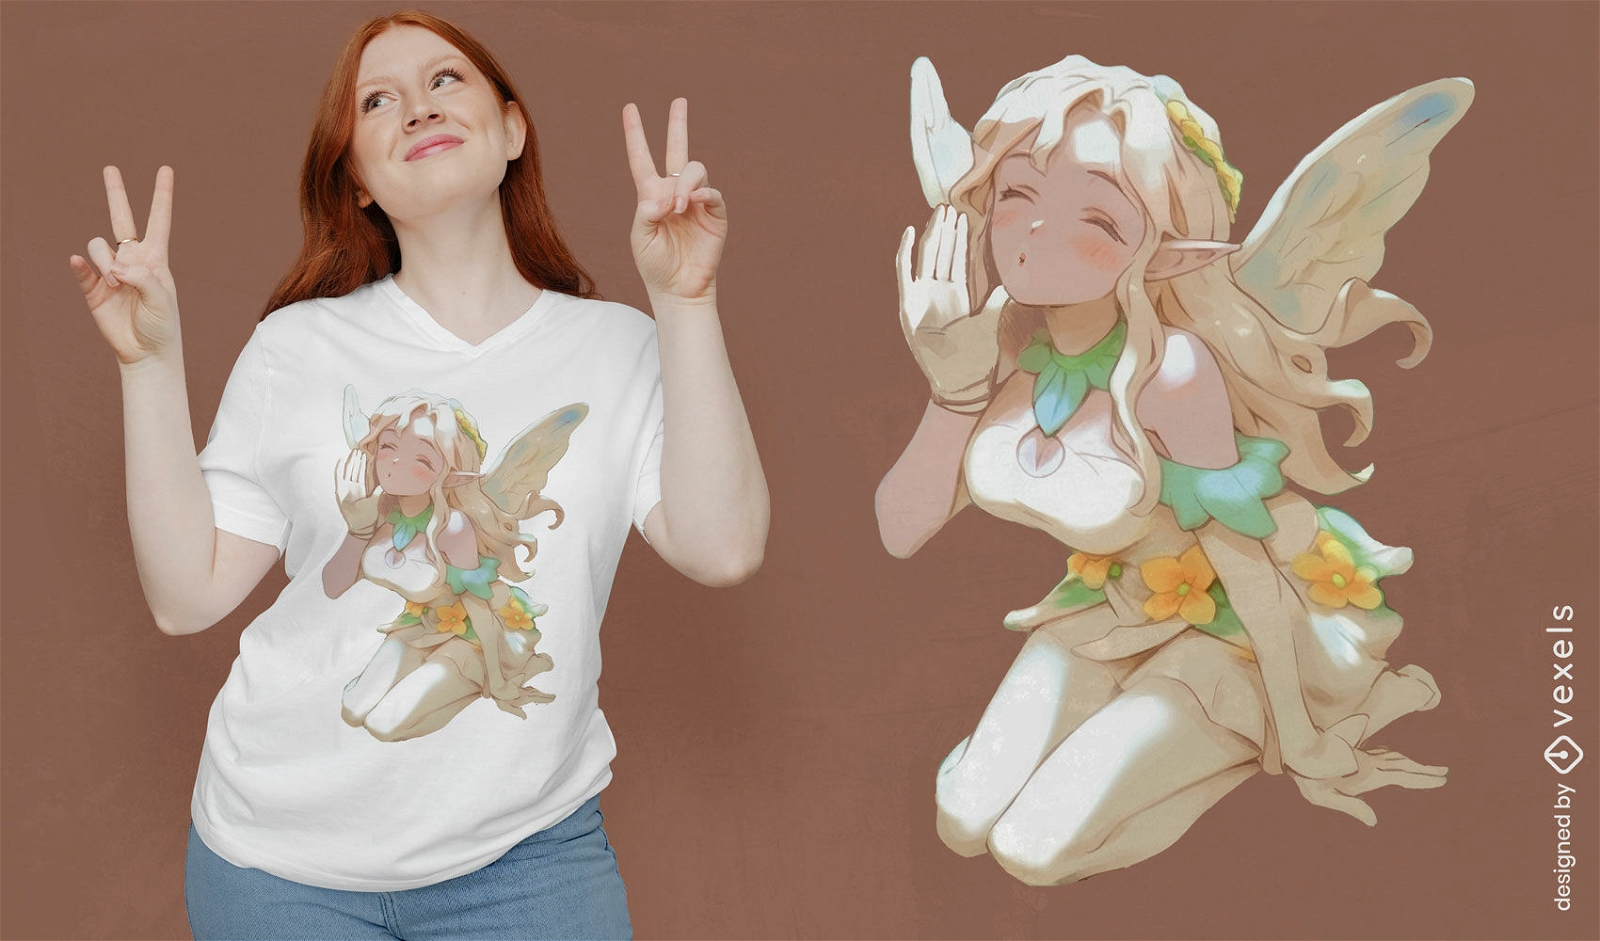 Fairy fantasy character t-shirt design